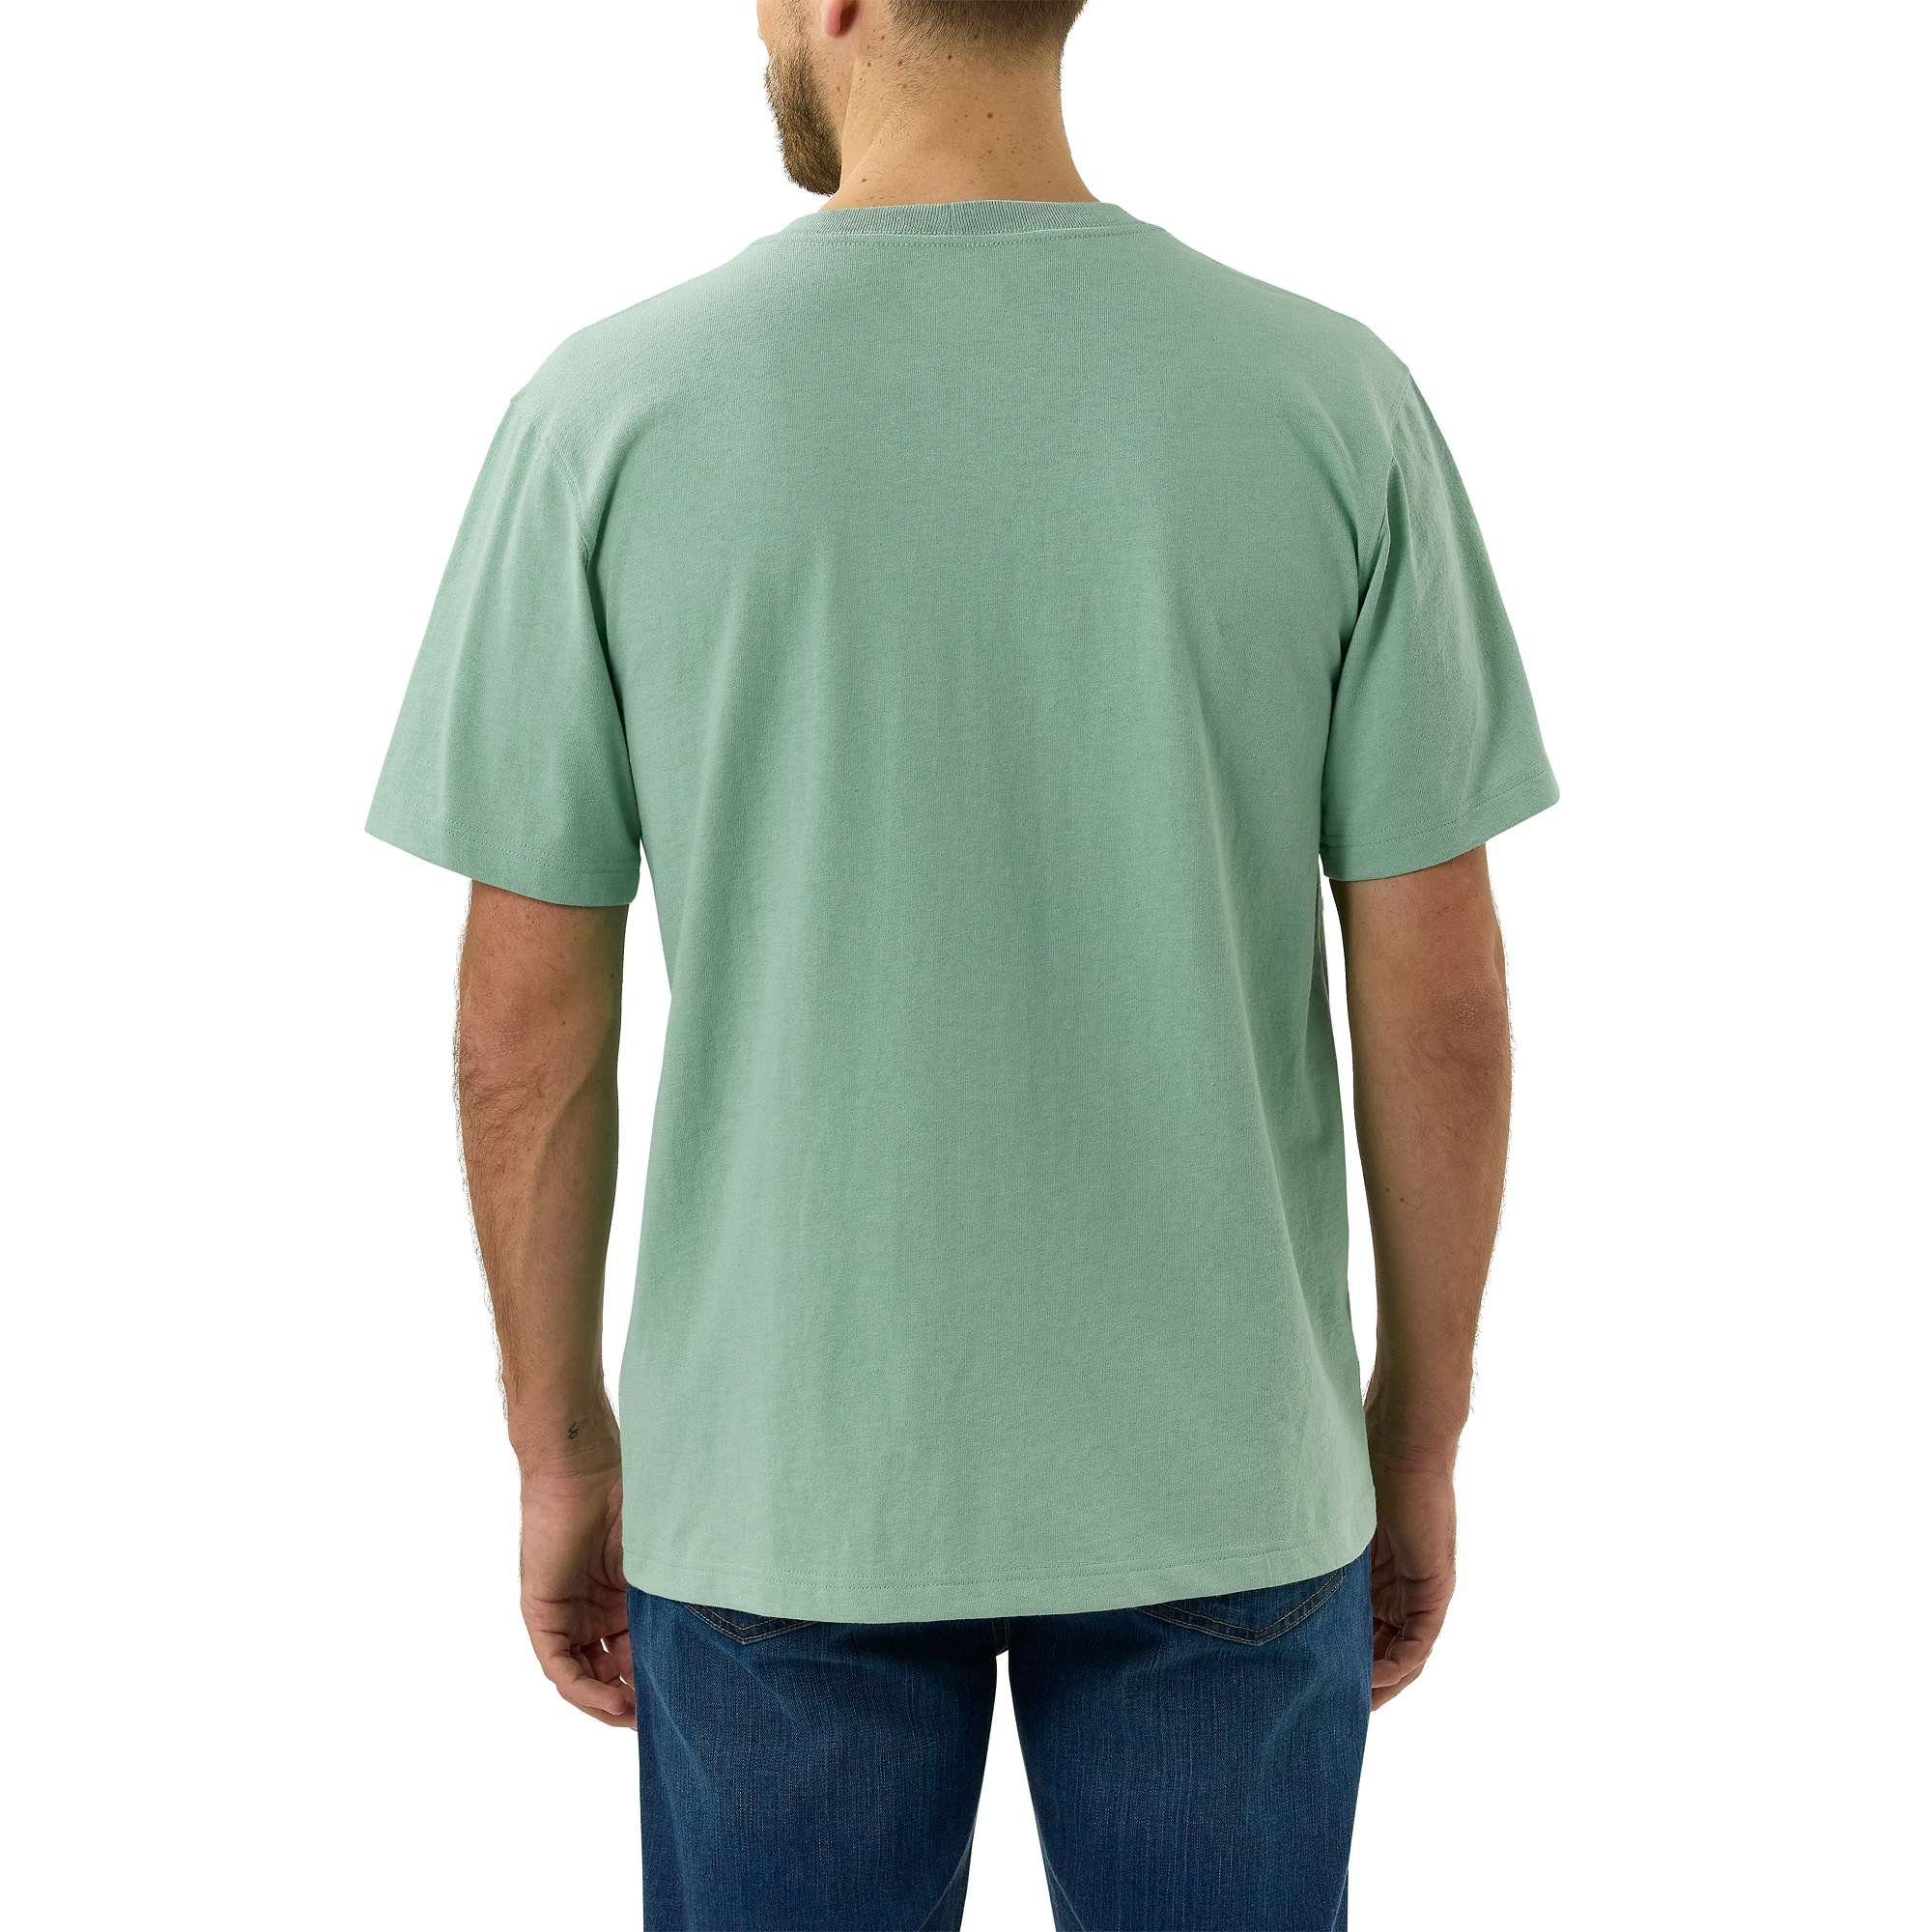 SeaGreen T-Shirt Carhartt Fit Pocket Relaxed K87